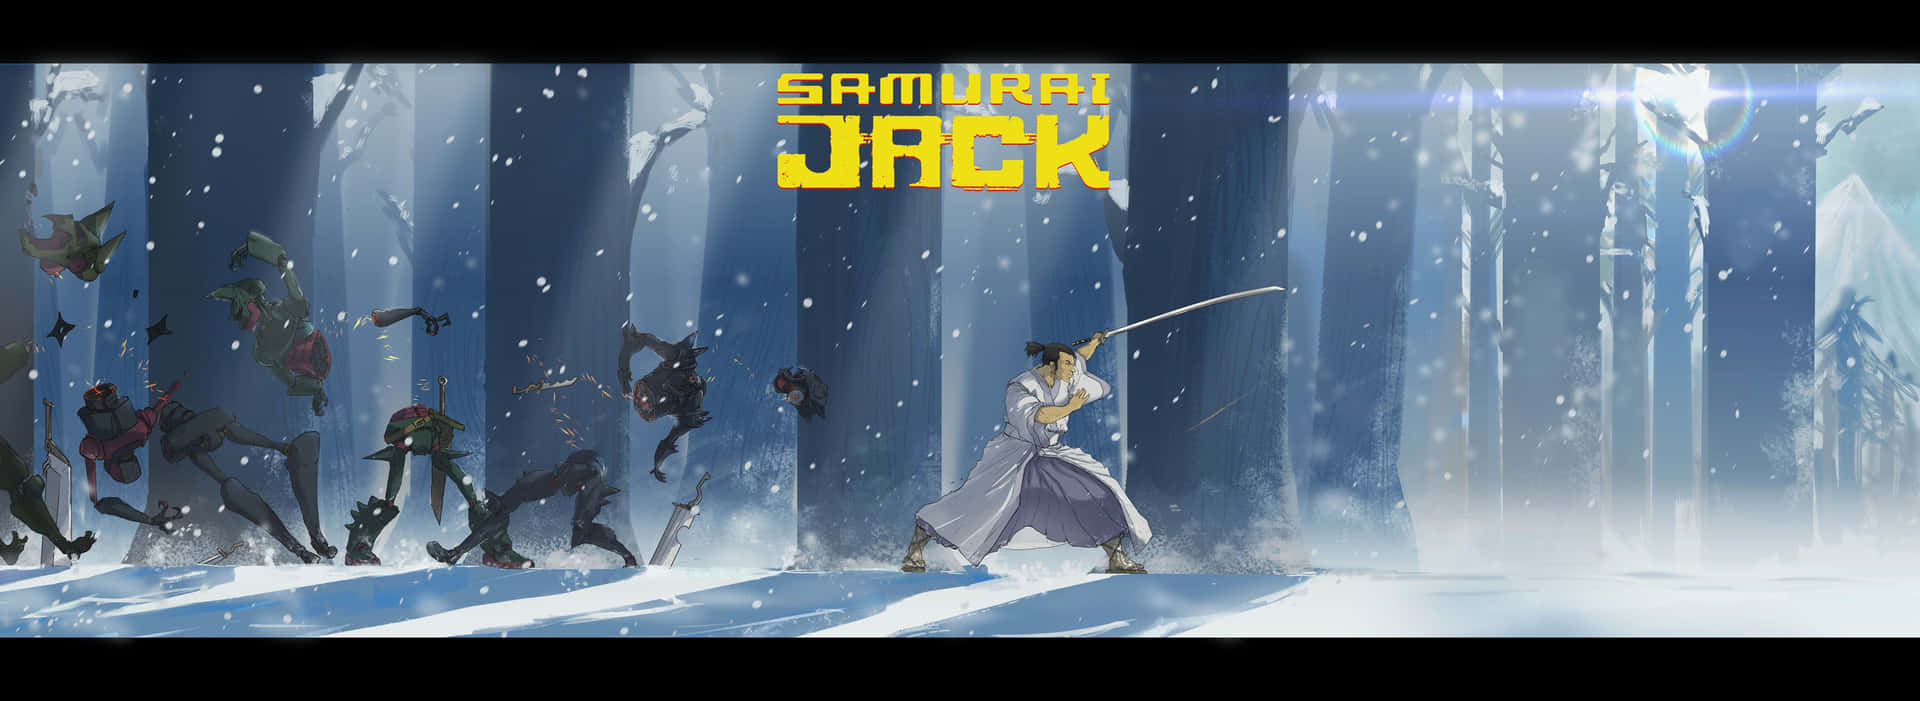 Samuraijack 3594 X 1313 Baggrund.